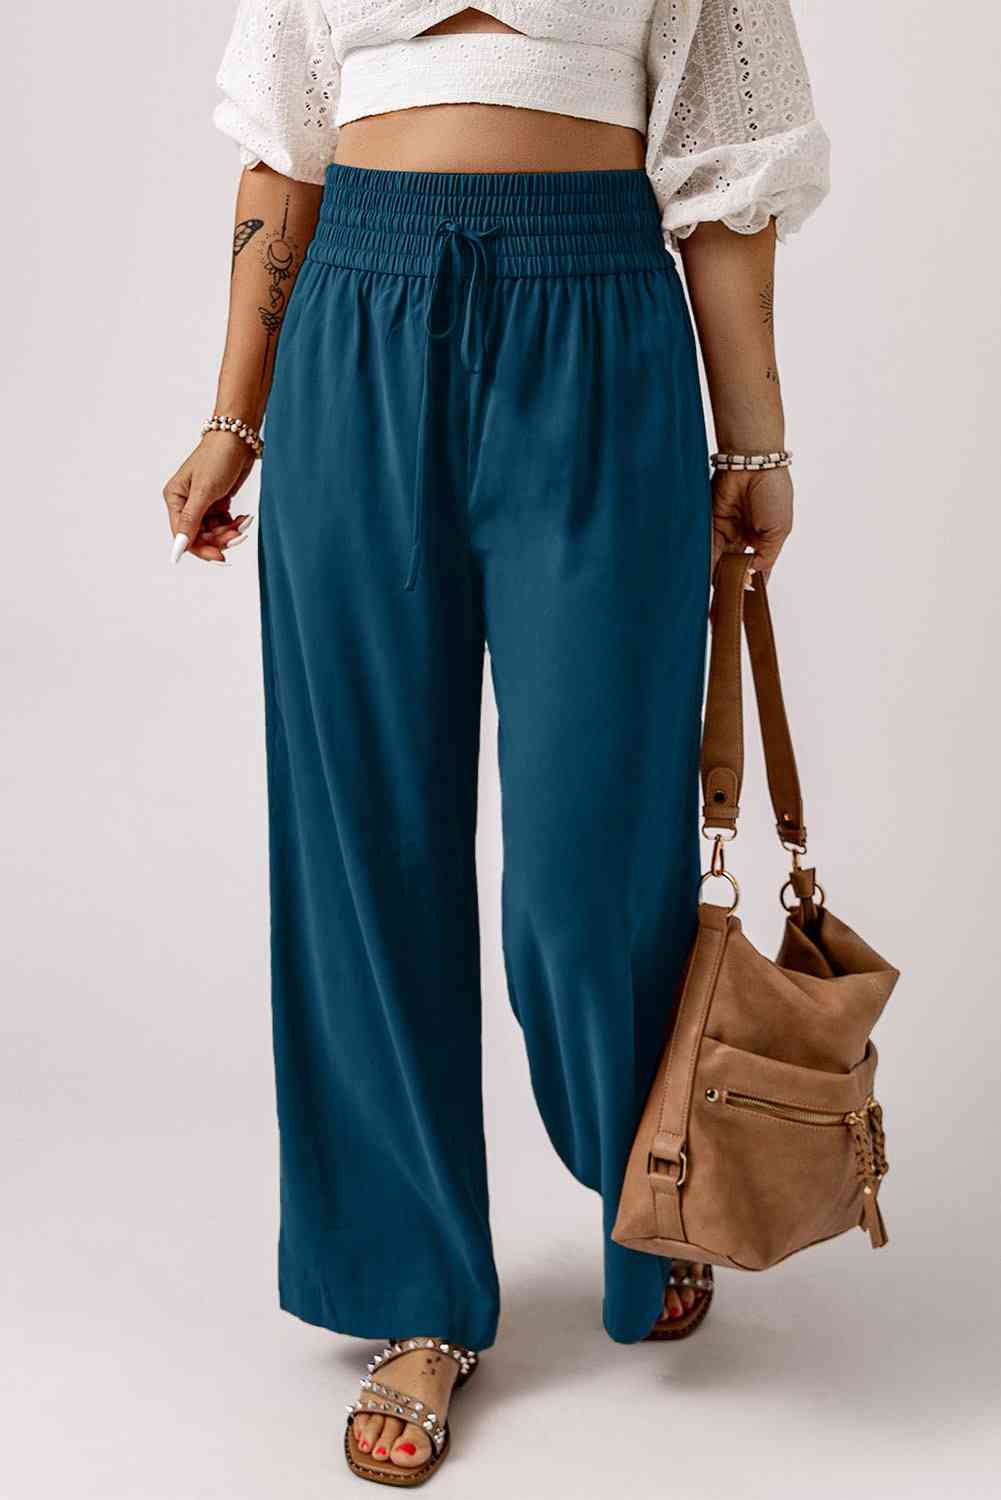 Drawstring Smocked Waist Wide Leg Pants (3 Colors) pants Krazy Heart Designs Boutique   